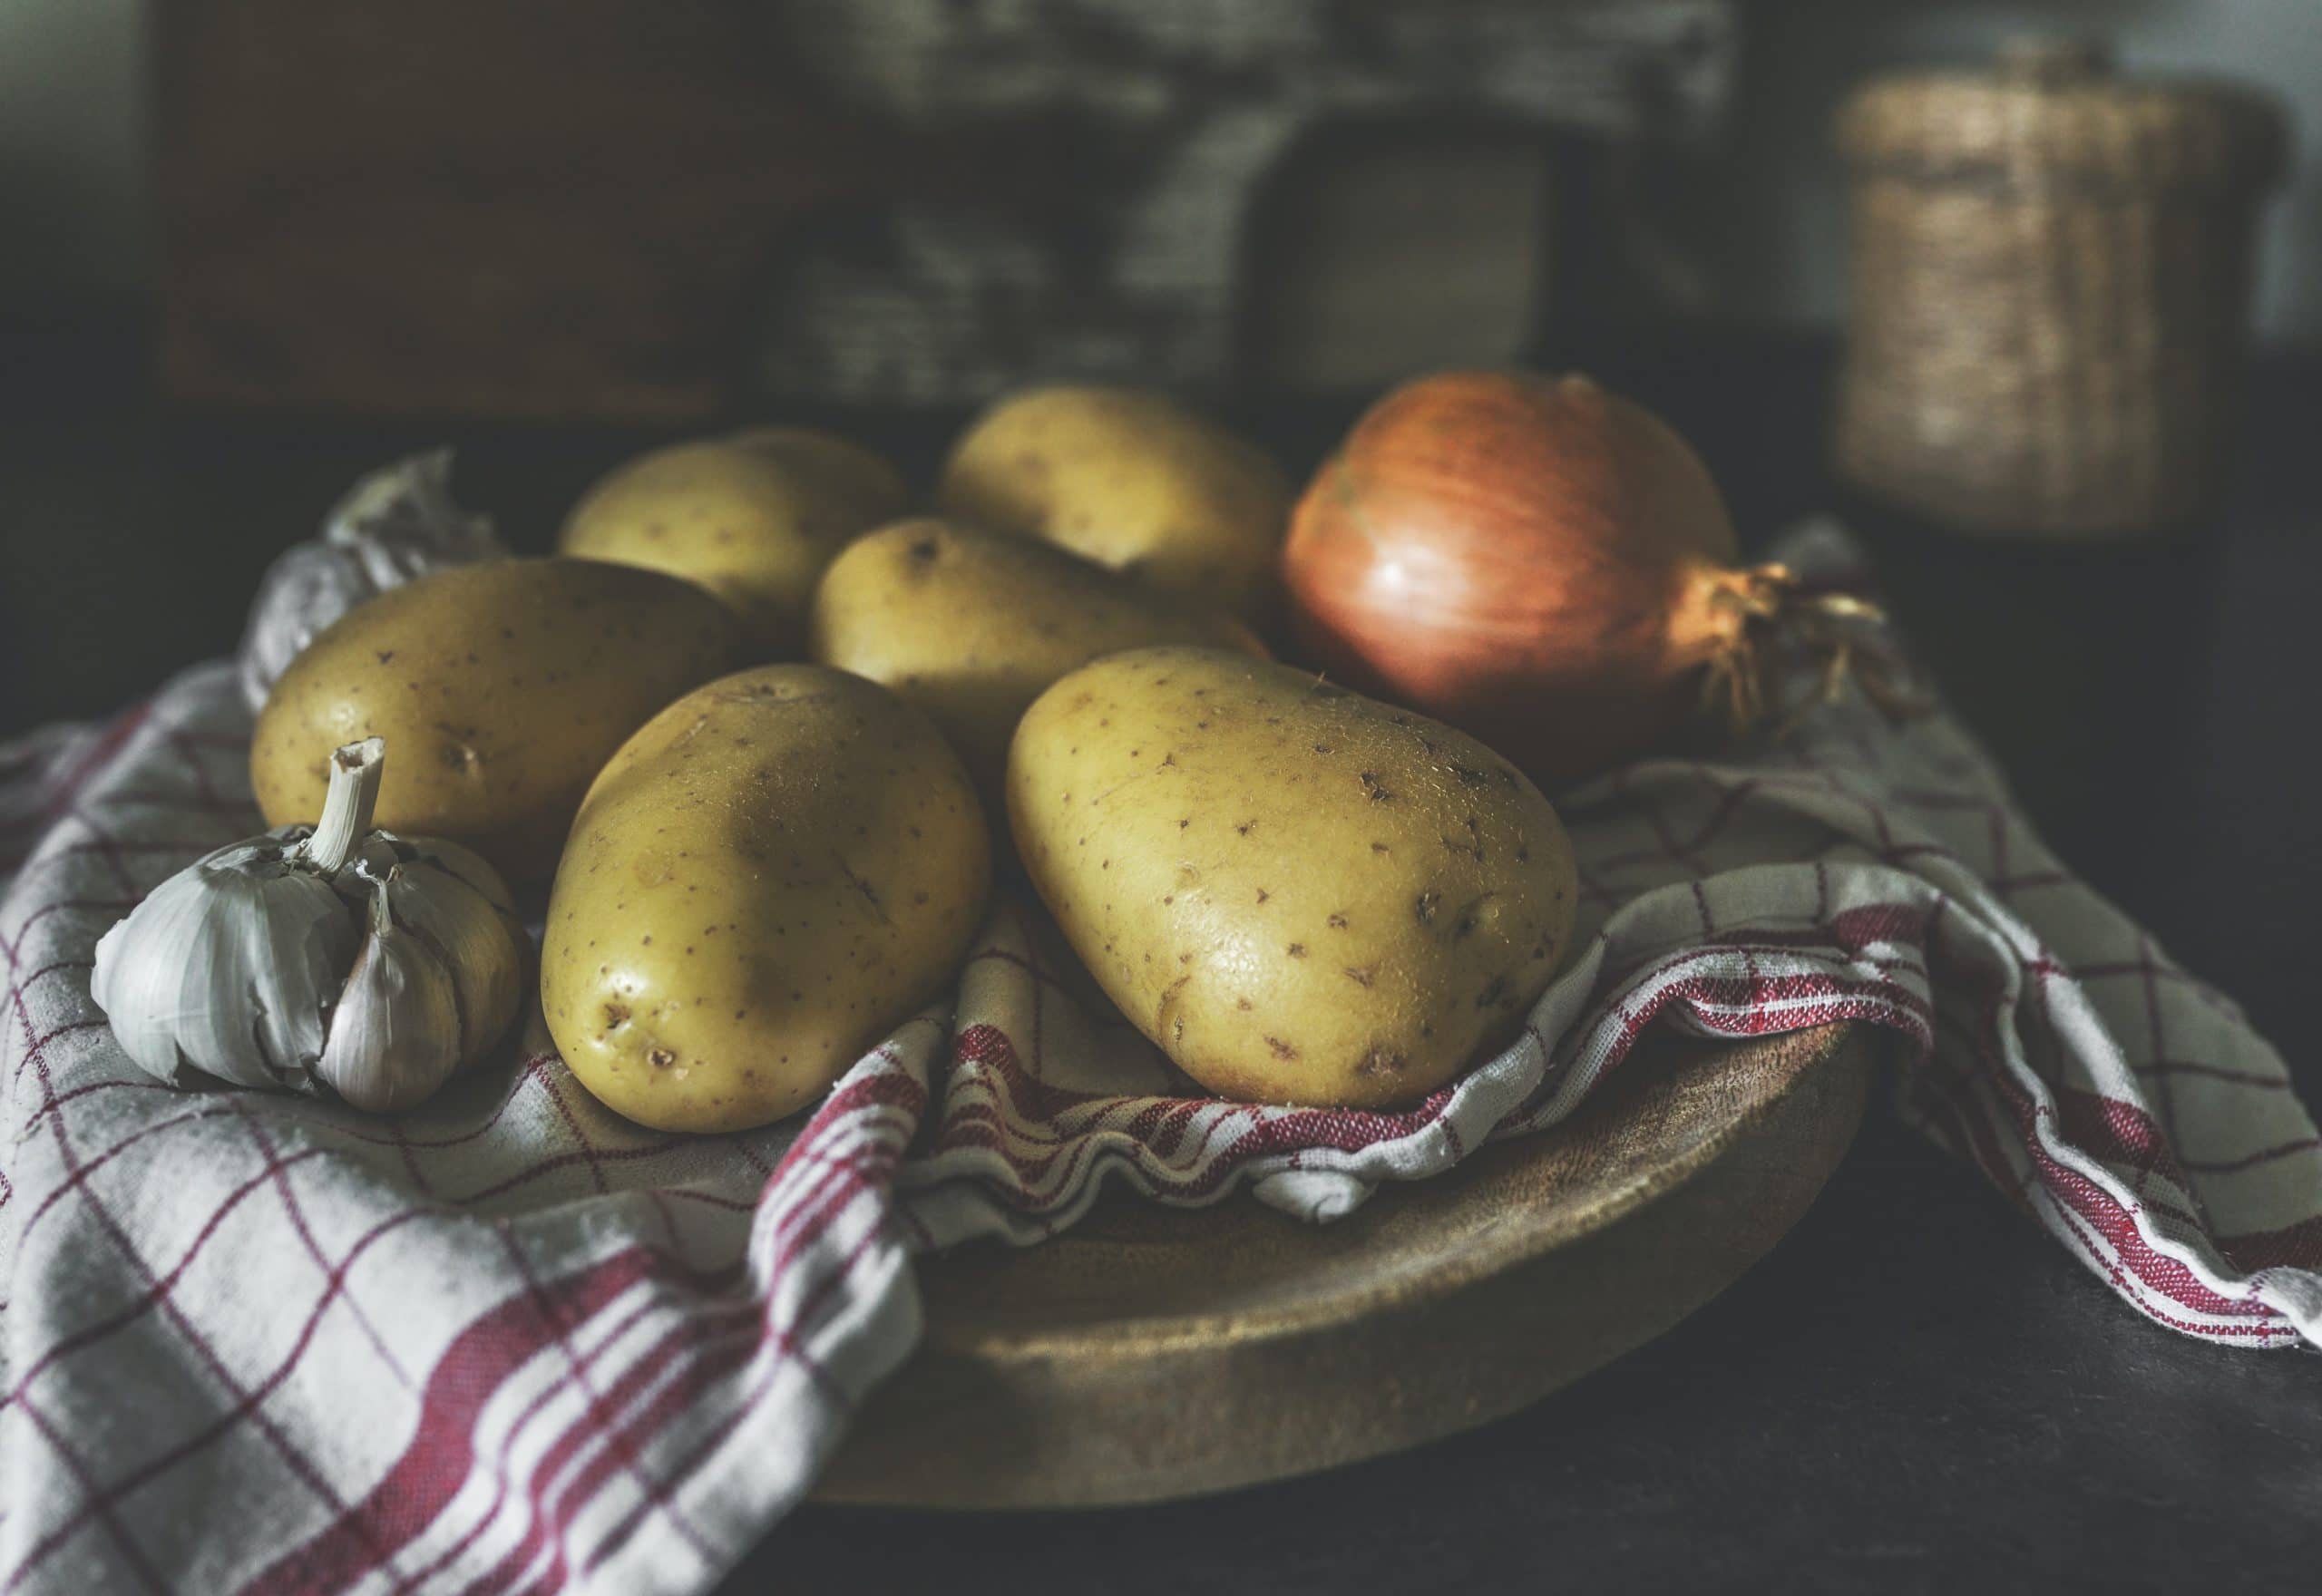 How long do raw potatoes last